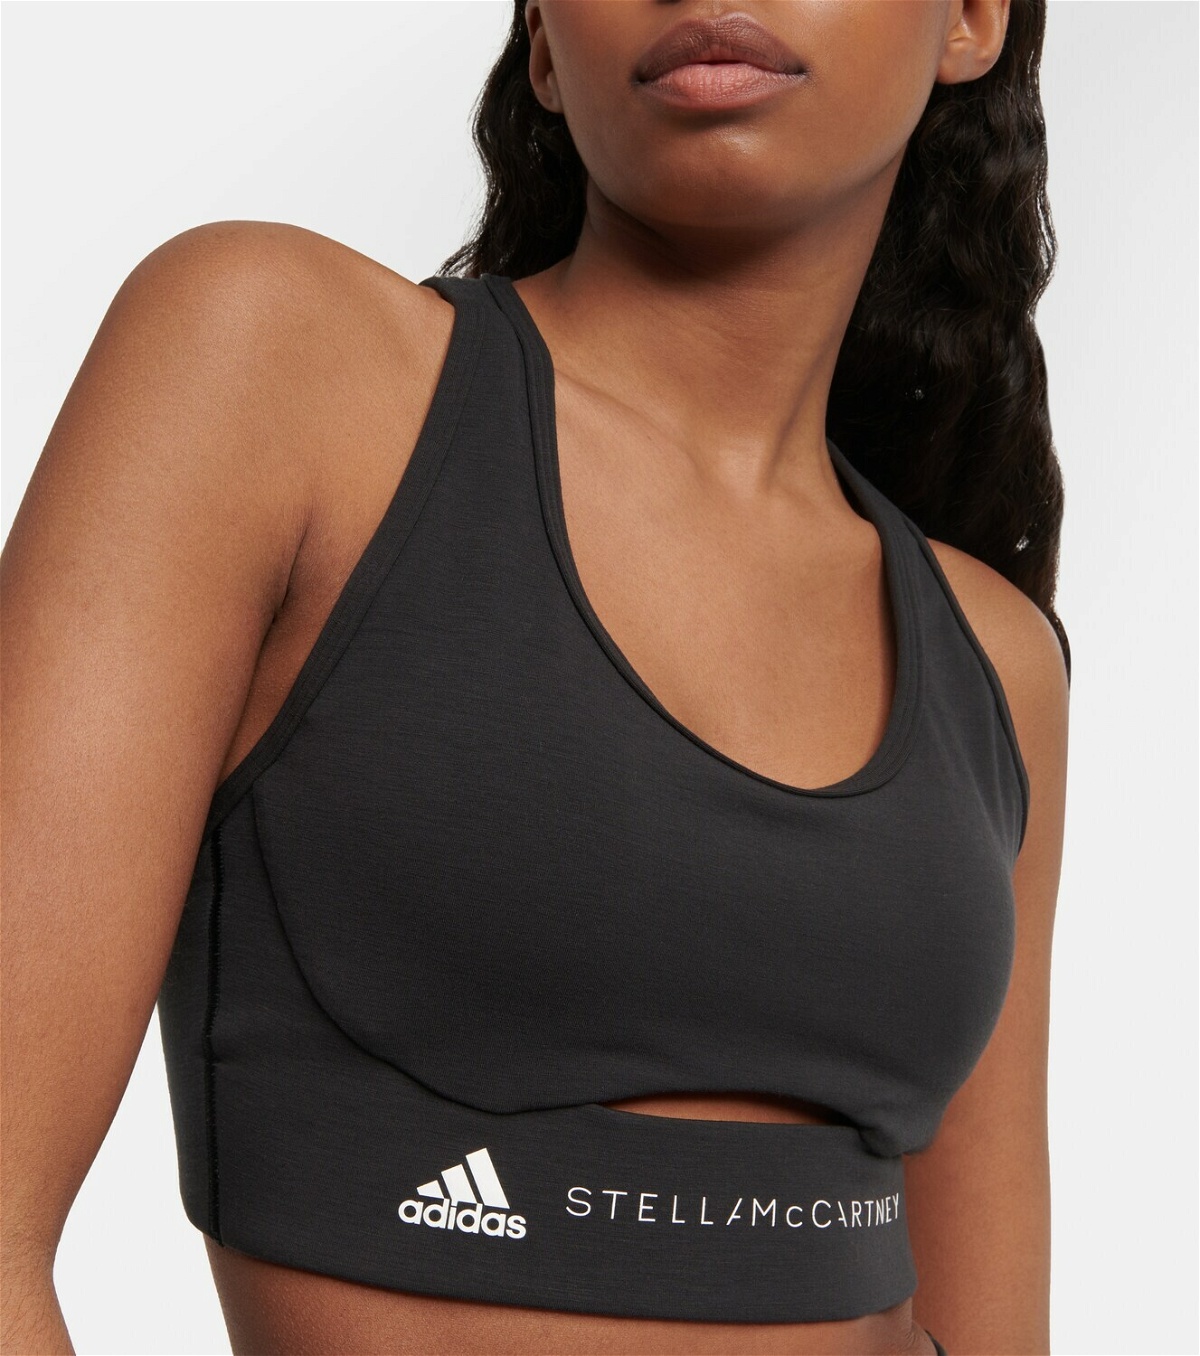 Adidas by Stella McCartney - TruePace sports bra adidas by Stella McCartney